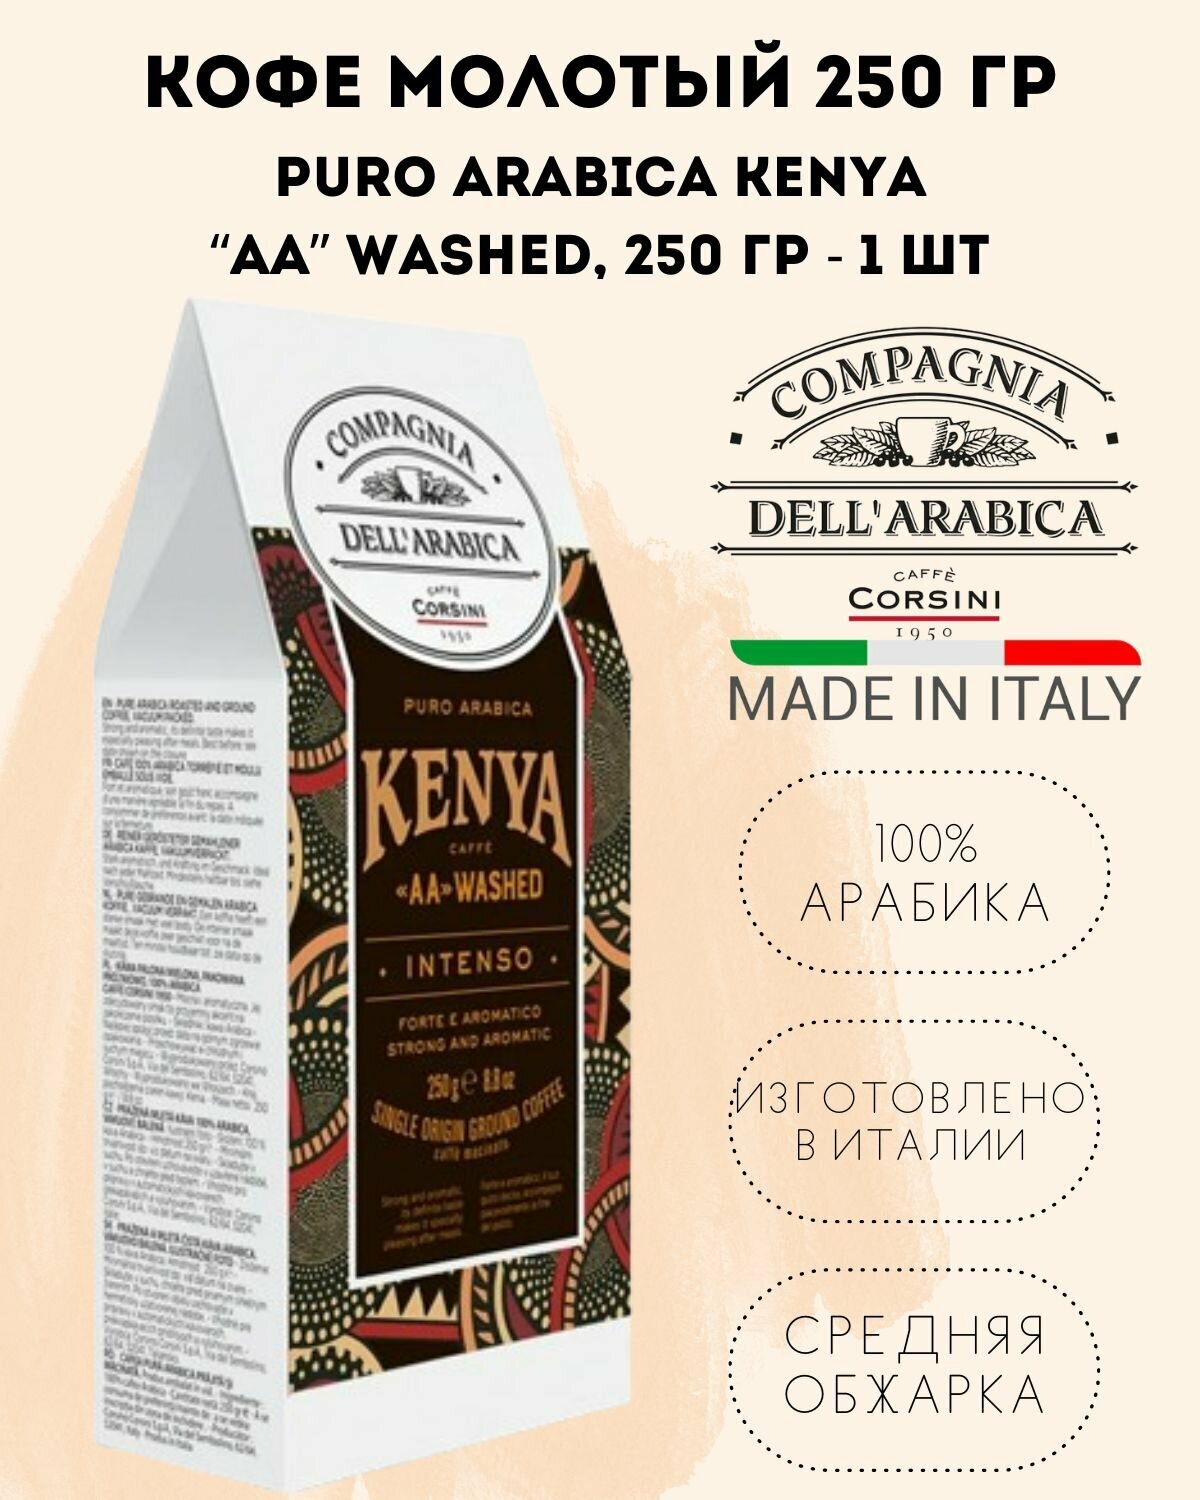 Кофе молотый Puro Arabica Kenya "AA" Washed (Дель Арабика пуро арабика каффе кения "АА" вашед)250 гр